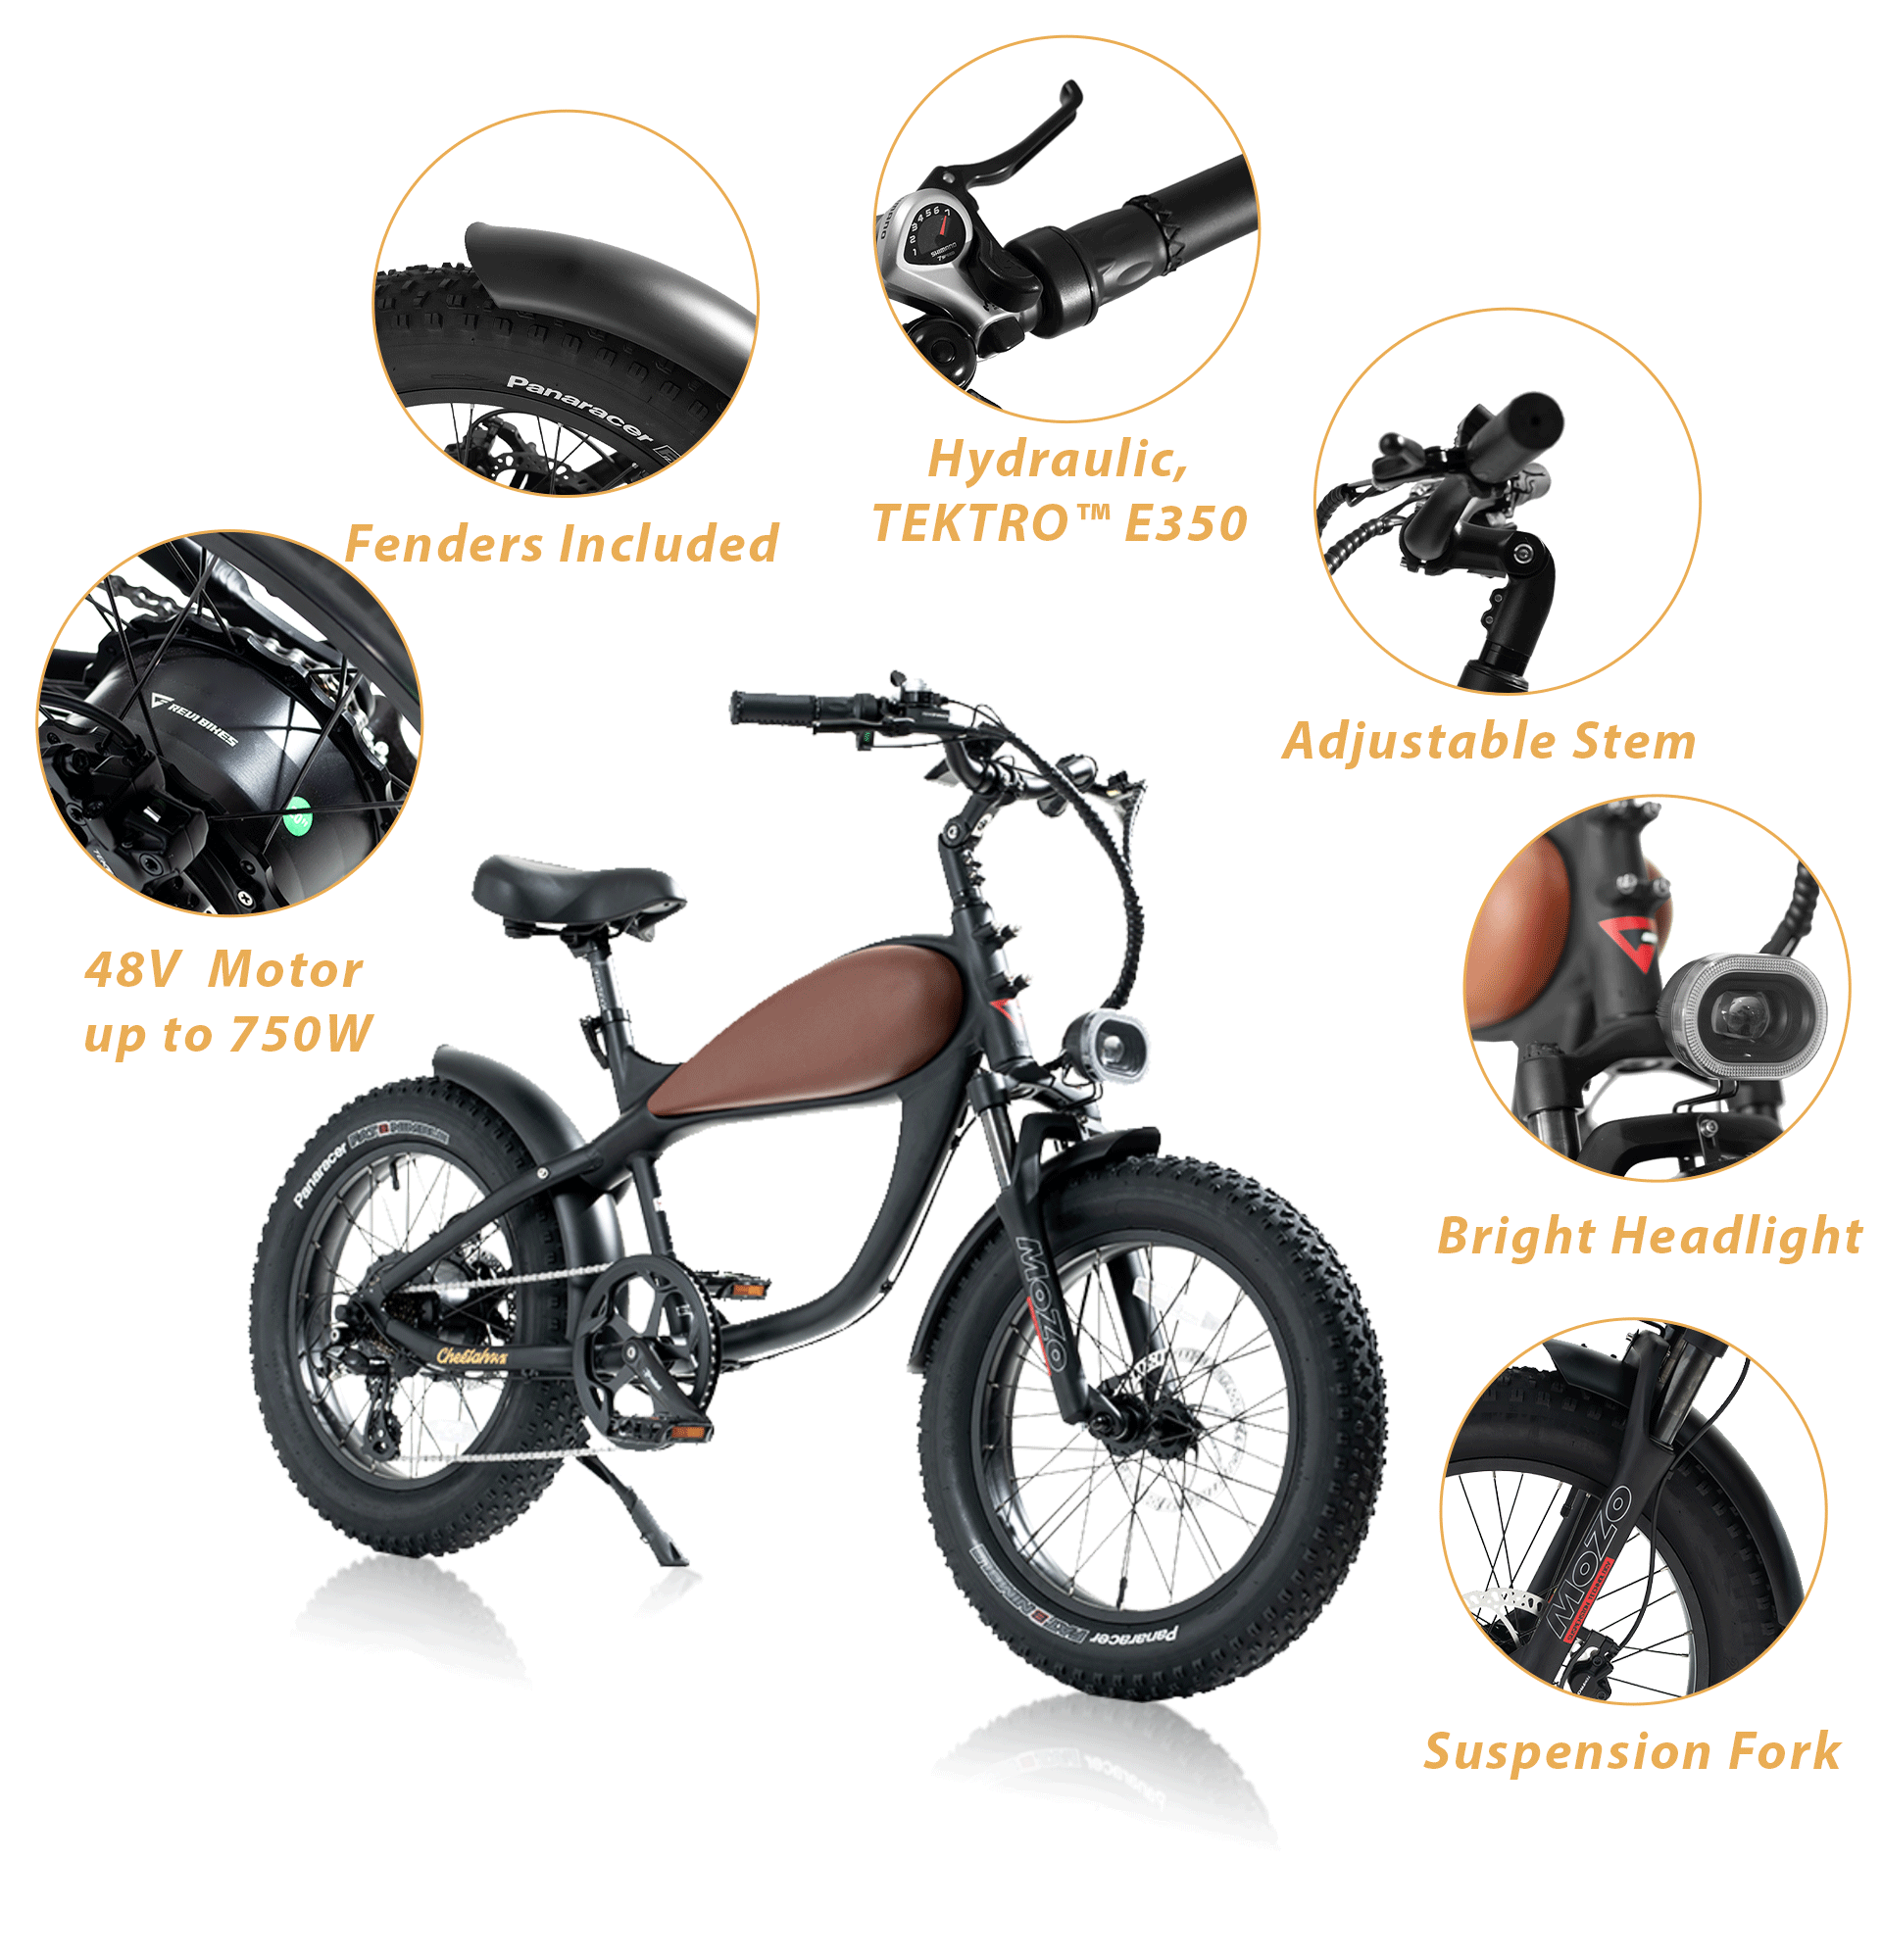 revi-cheetah-cafe-racer-mini-electric-bike-features